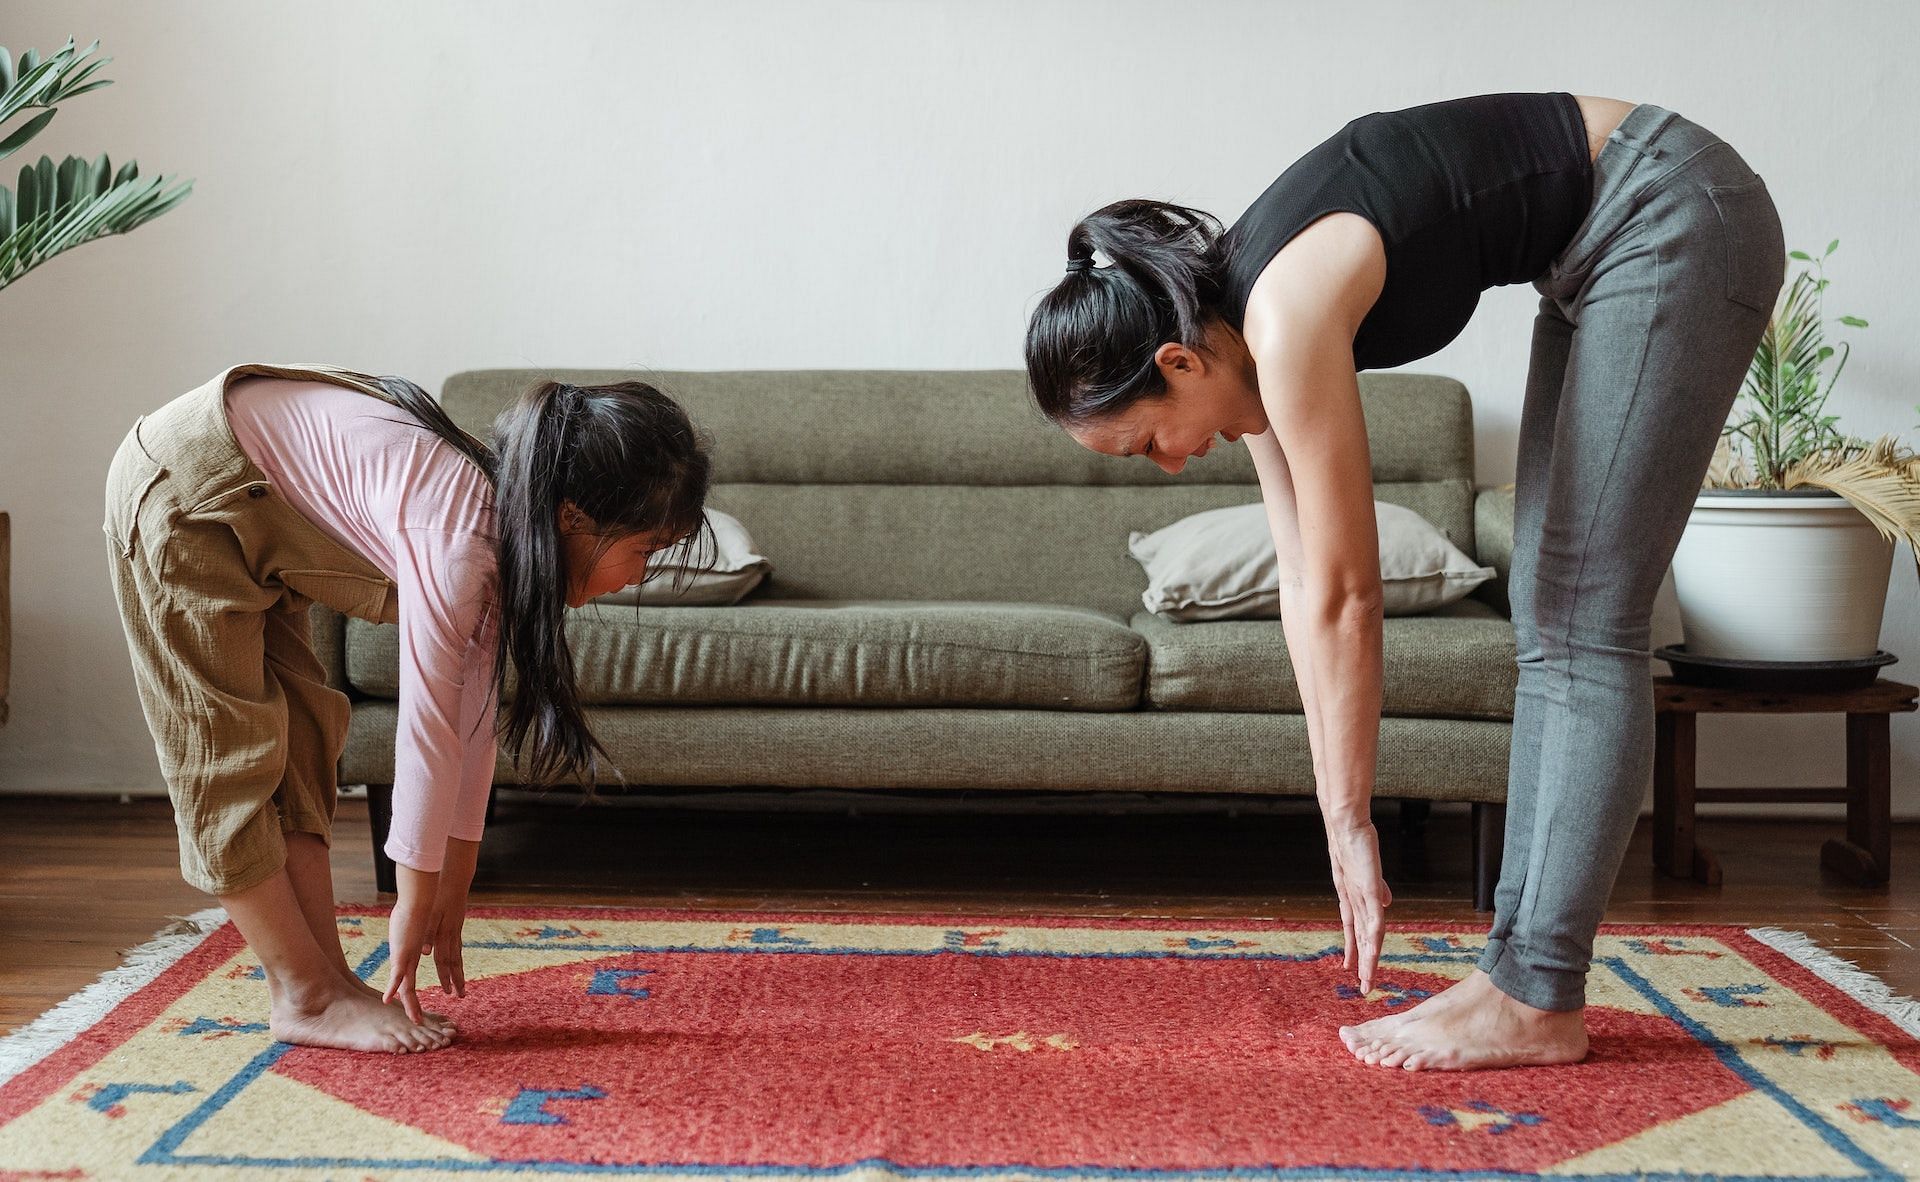 Acro yoga helps build balance and focus. (Photo via Pexels/Ketut Subiyanto)